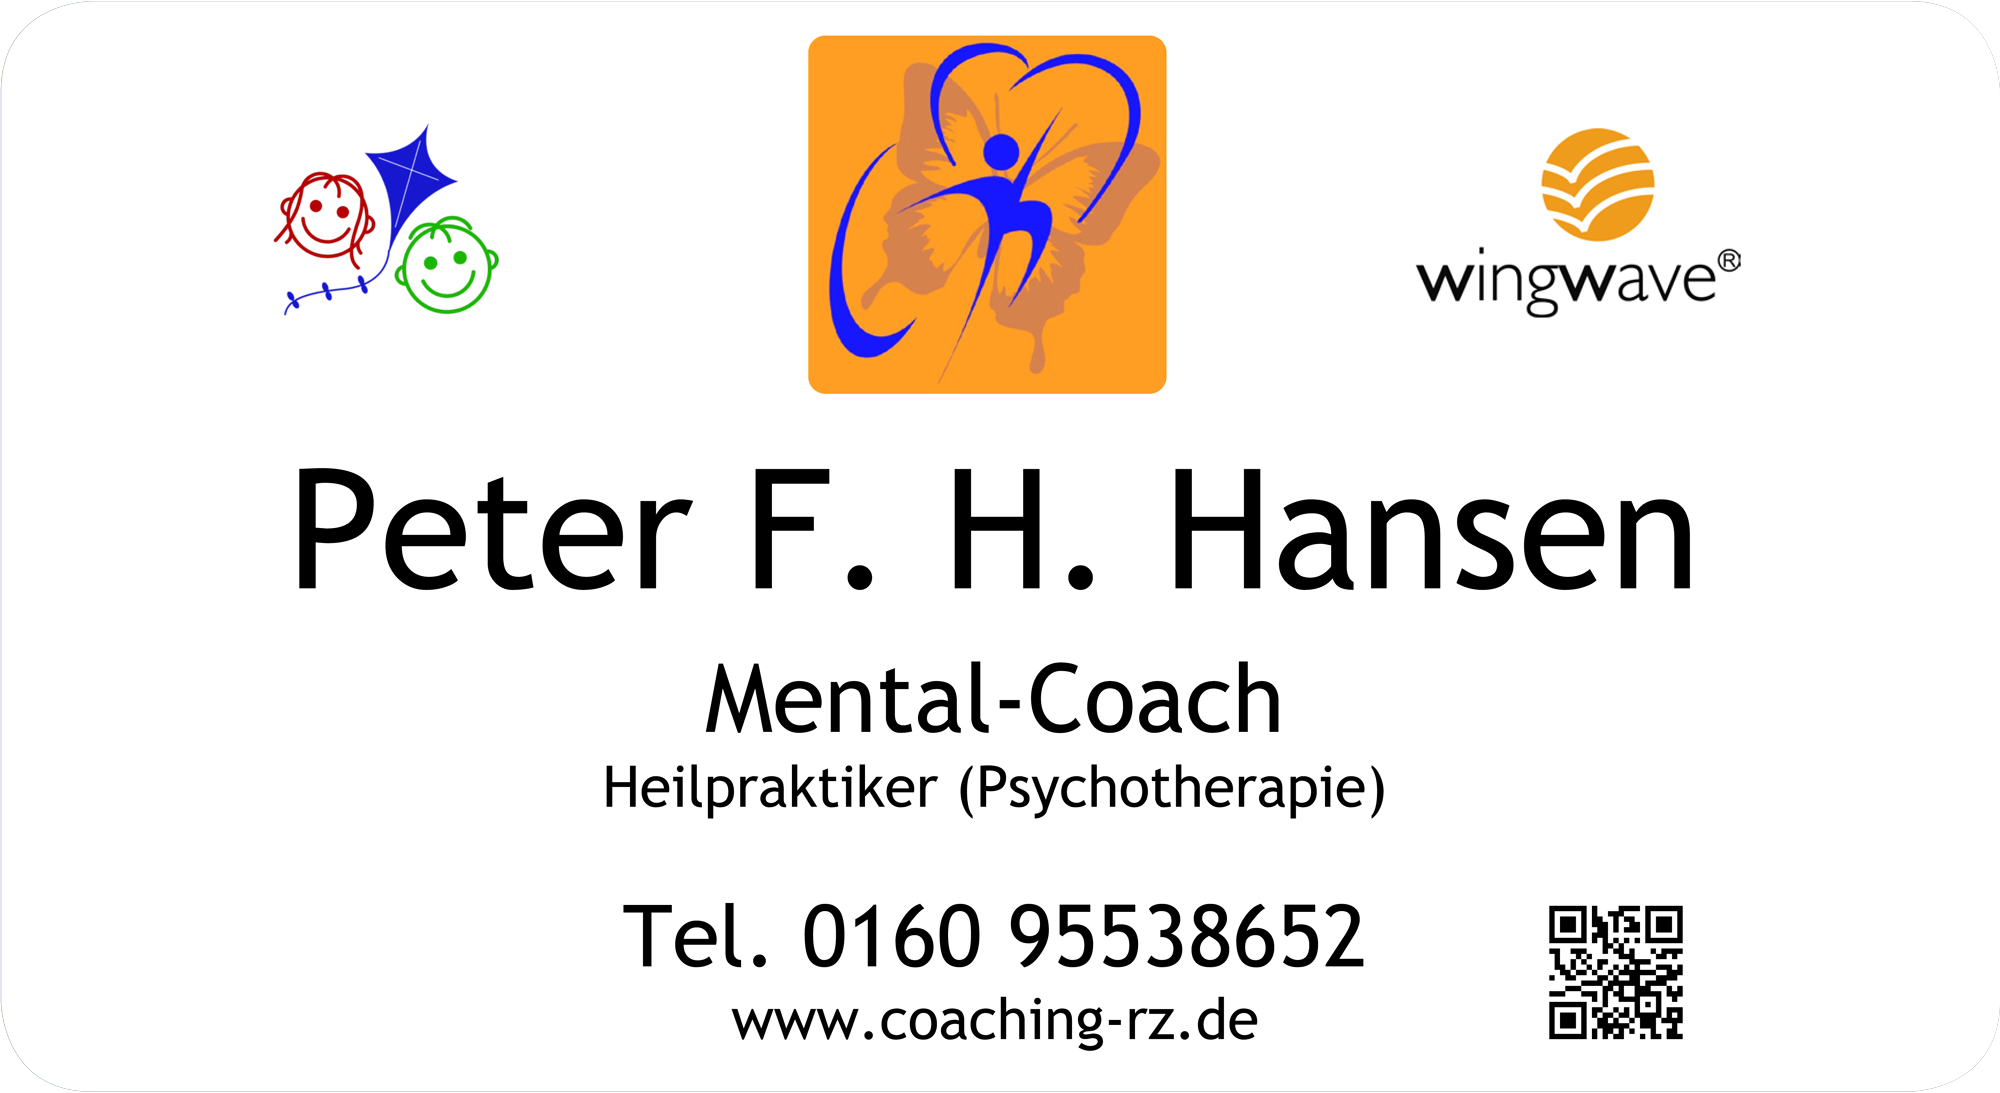 Peter F. H. Hansen - Mental-Coach - Heilpraktiker (Psychotherapie)